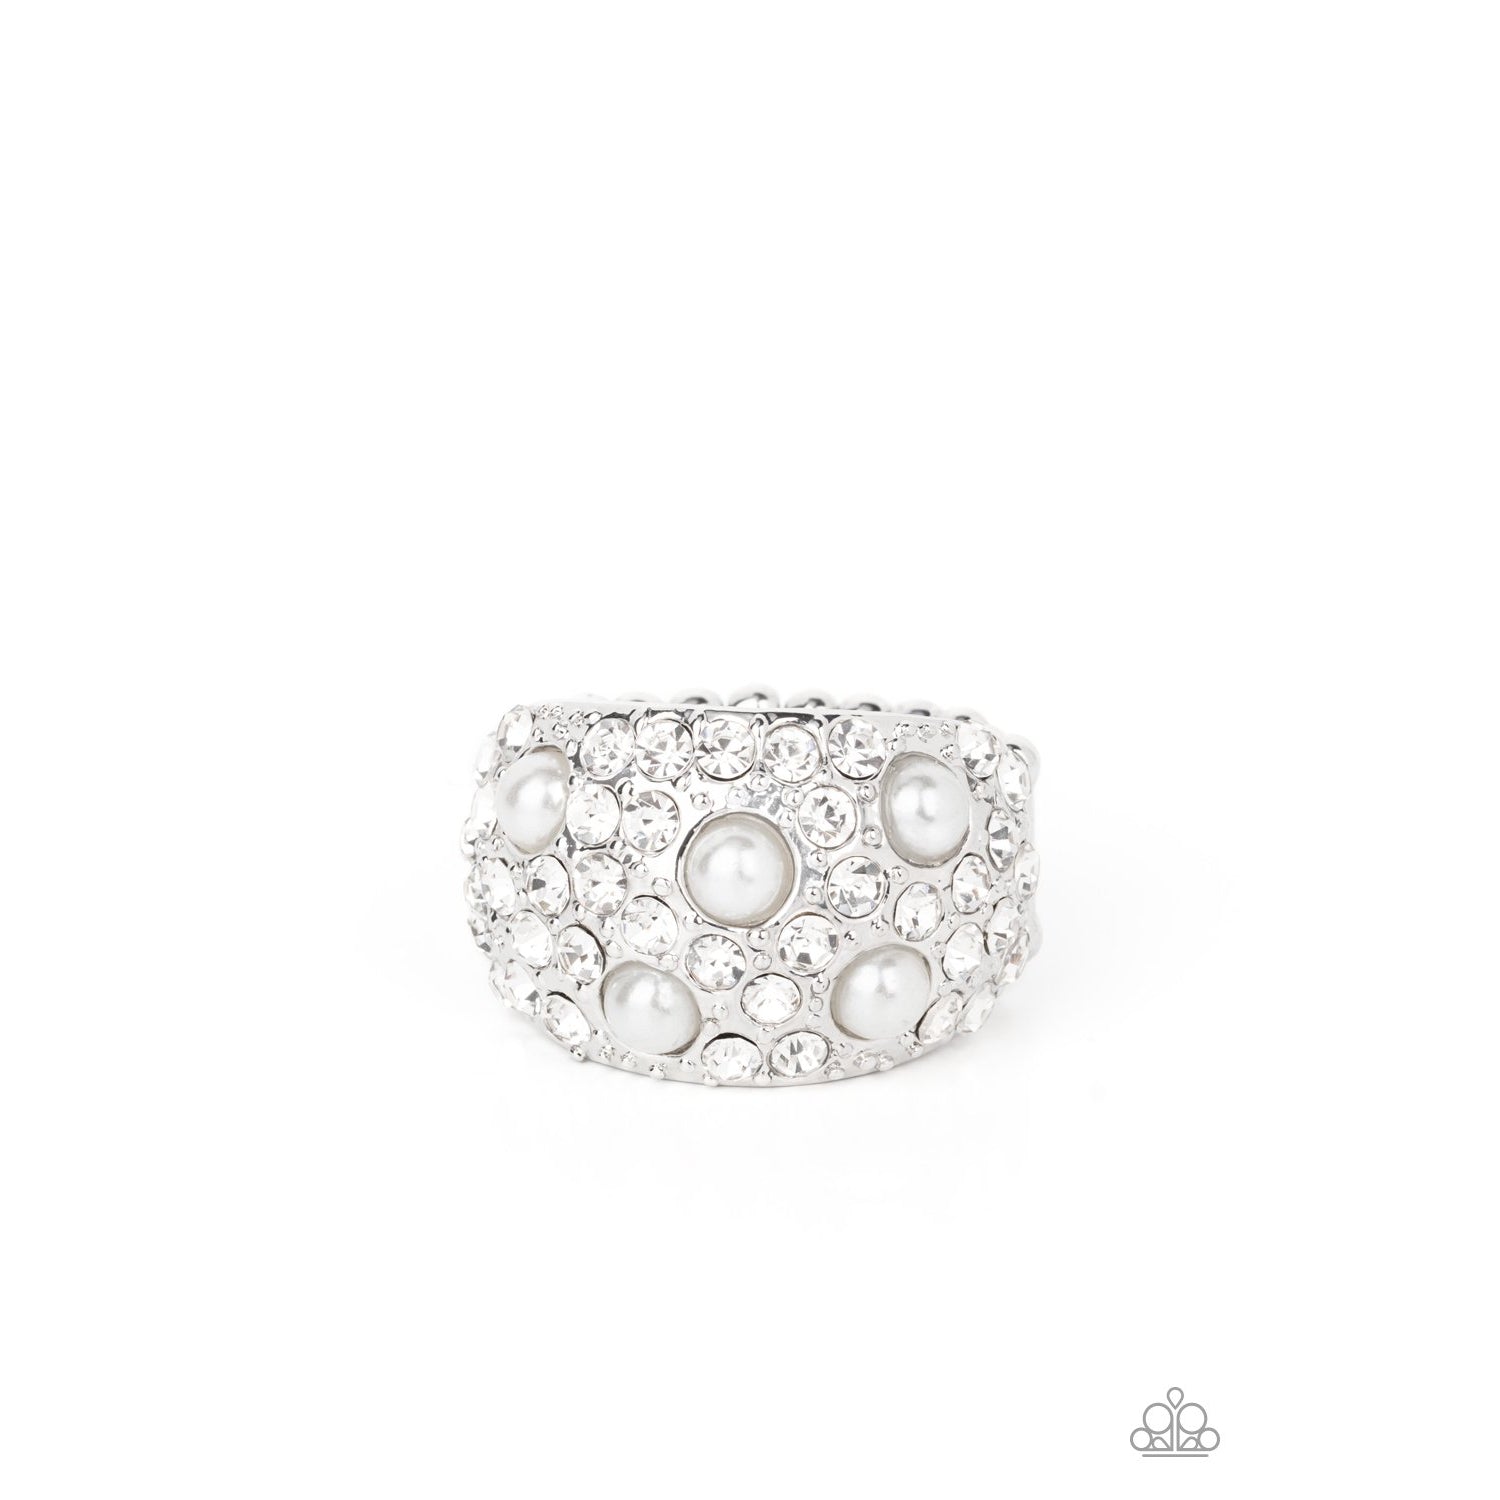 Gatsbys Girl - White Pearl & Rhinestone Ring - Paparazzi Accessories - GlaMarous Titi Jewels